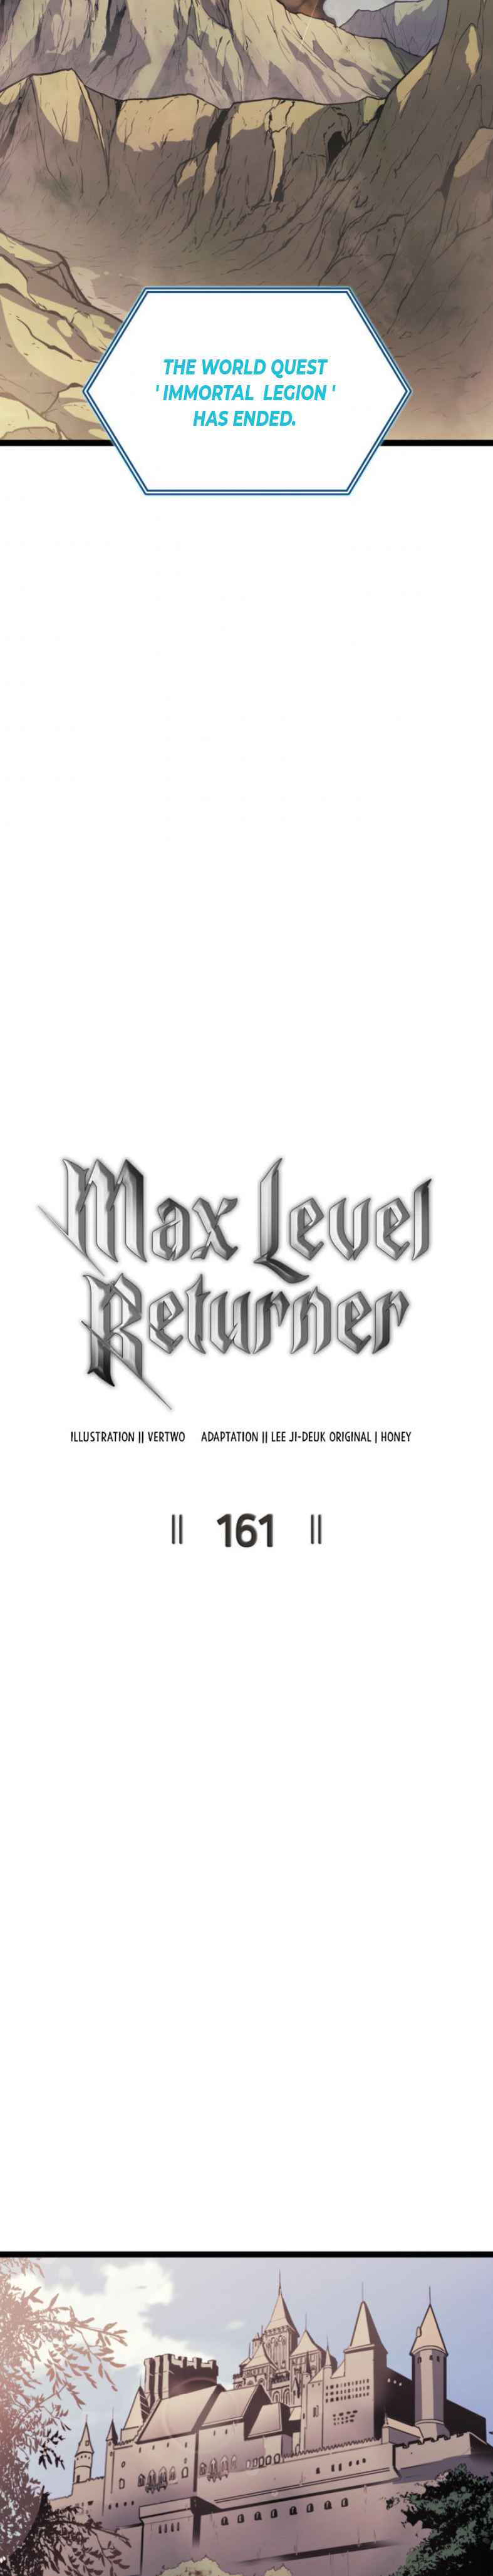 Max Level Returner 161 11